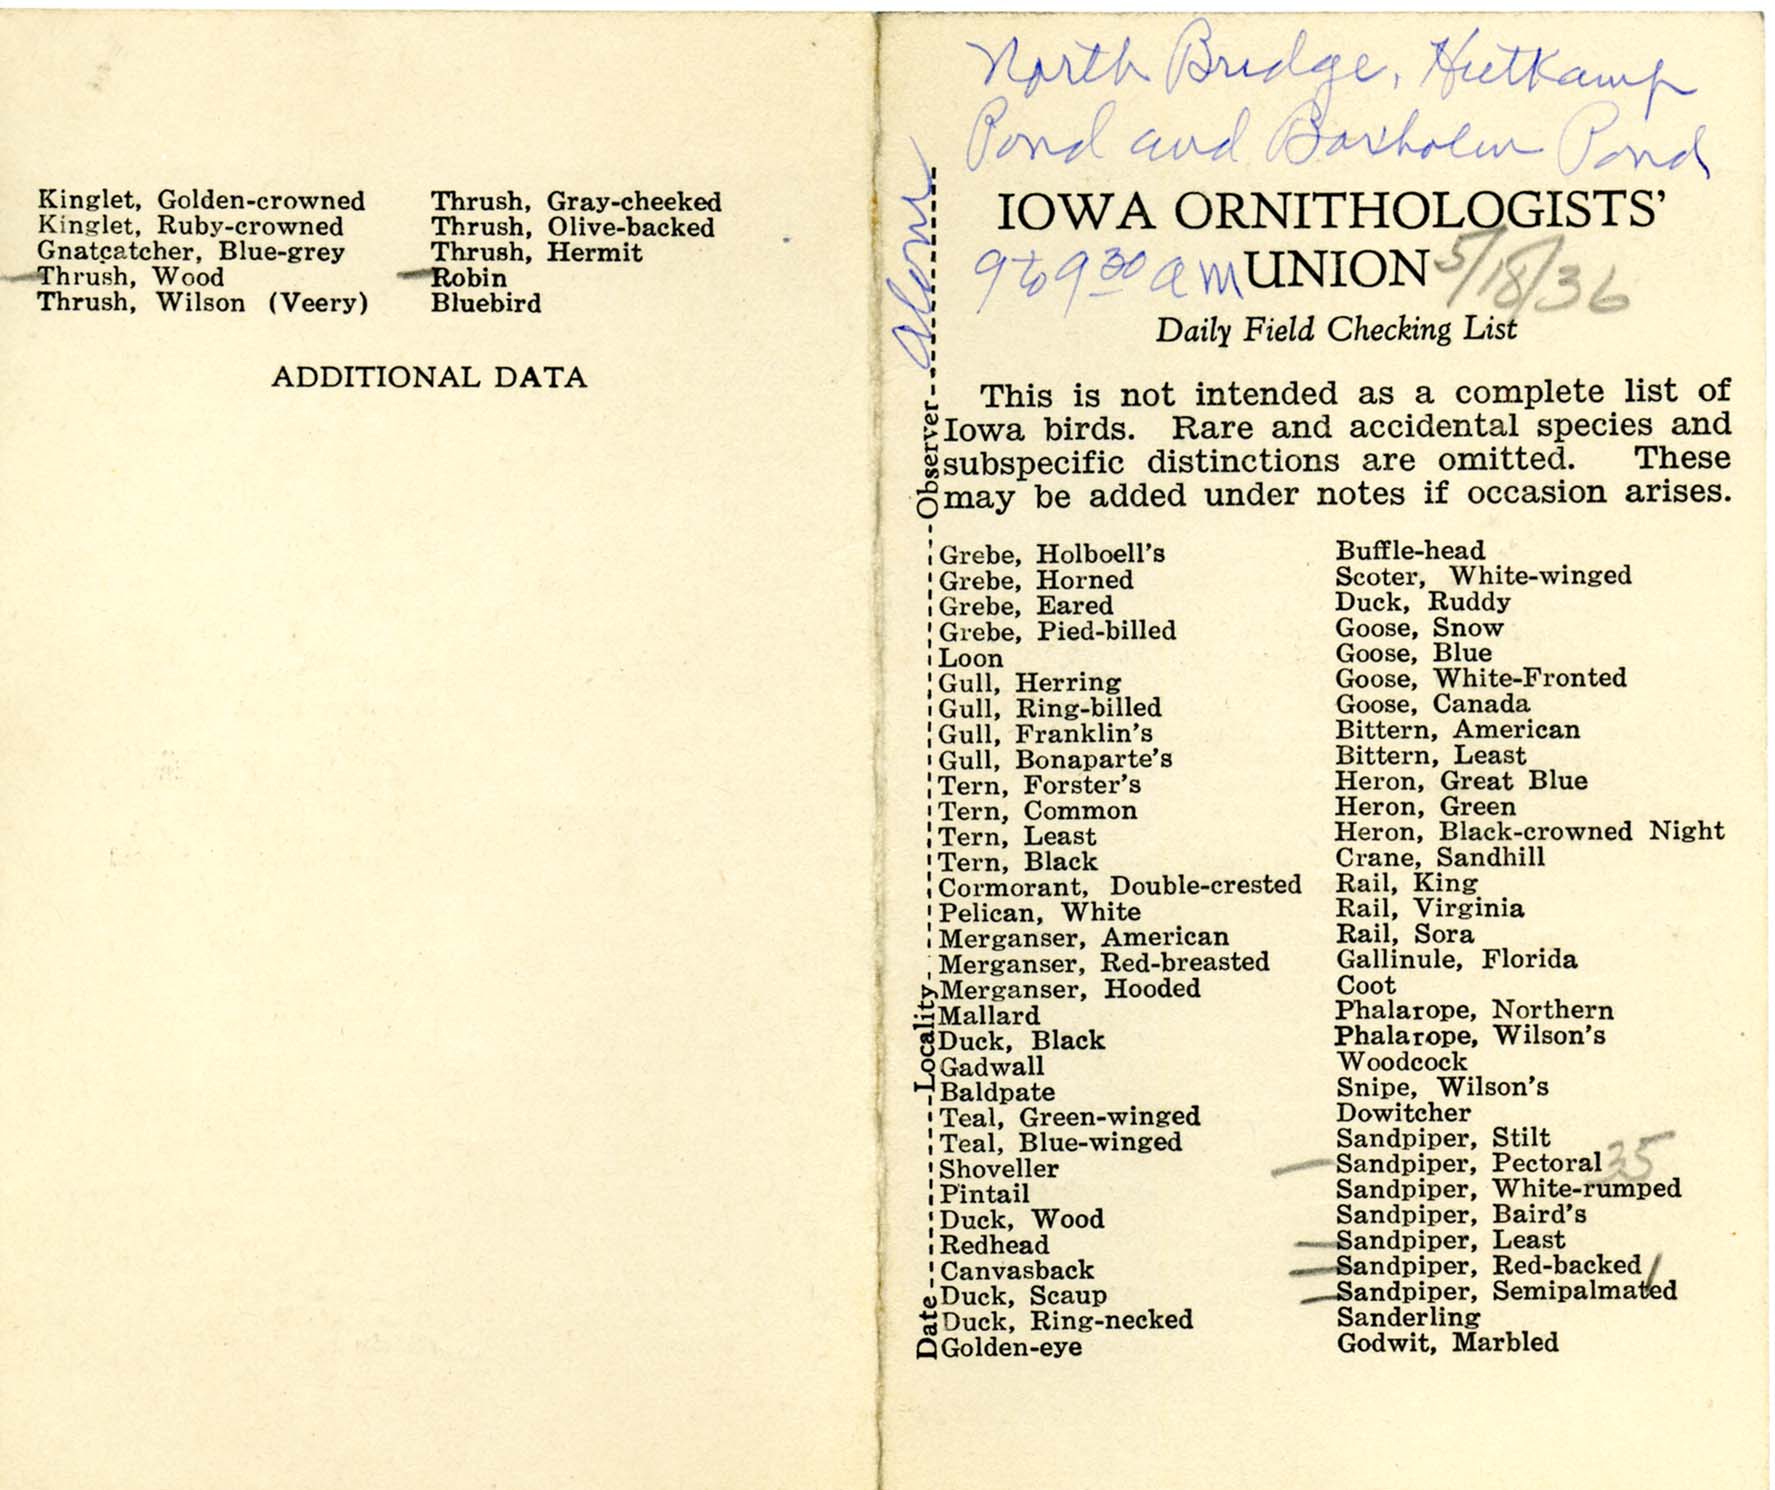 Daily field checking list, Walter Rosene, May 18, 1936